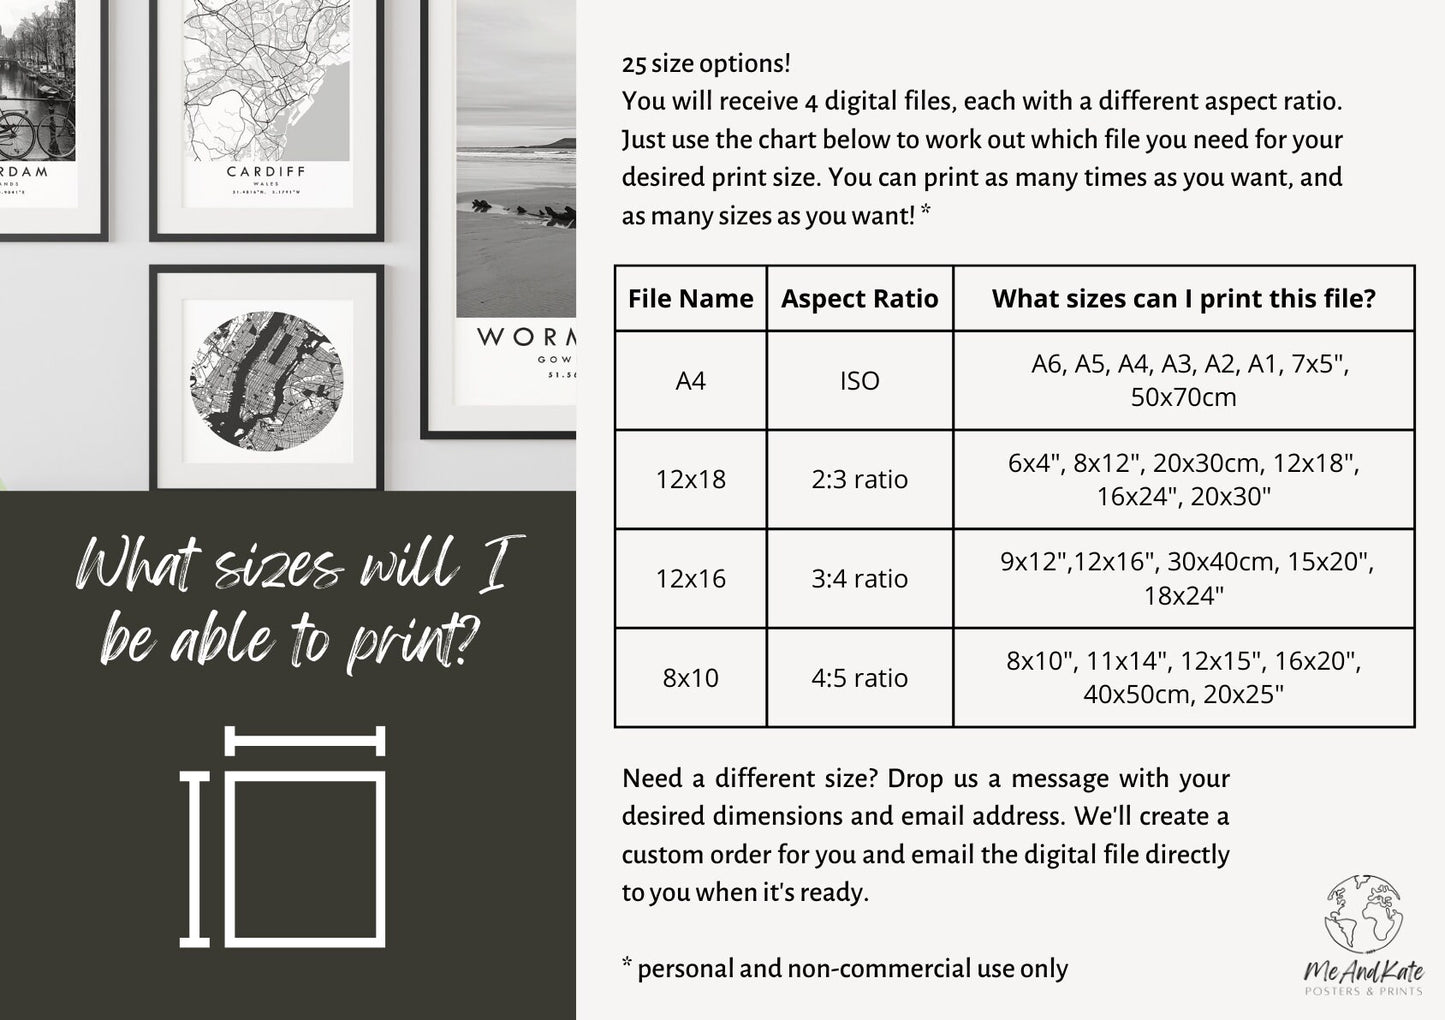 Aberdeen Travel Print | Digital Download | 25 Different Size Options